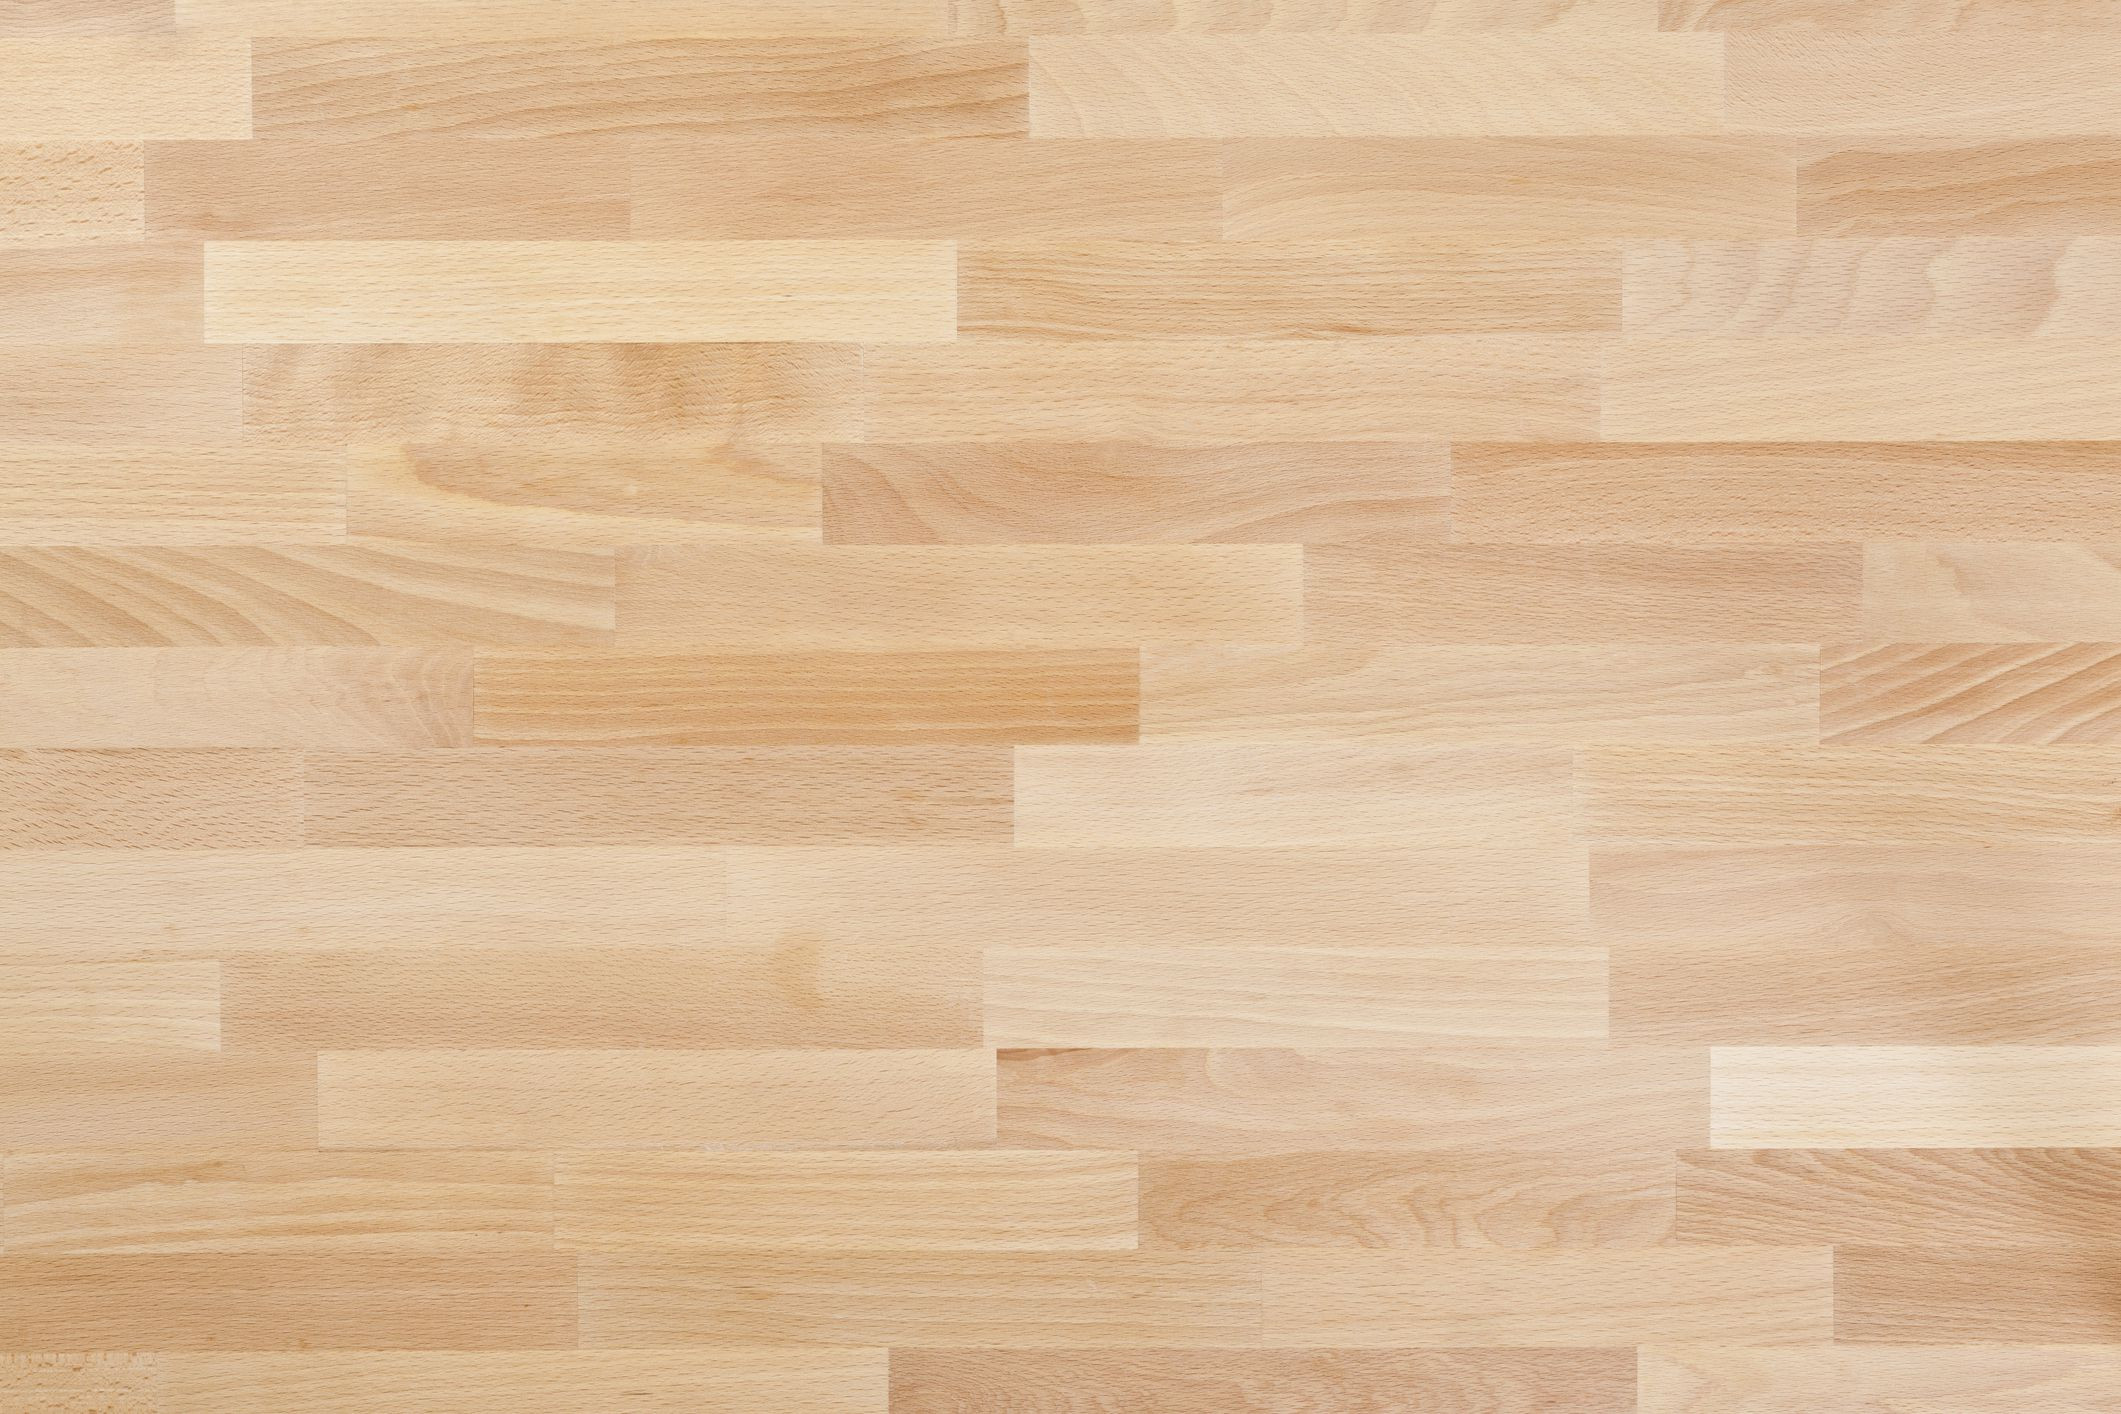 22 Ideal Hardwood Floor Refinishing Waukesha 2024 free download hardwood floor refinishing waukesha of does laminate flooring scratch easily intended for laminate flooring 185230326 58ff92175f9b581d595e760f